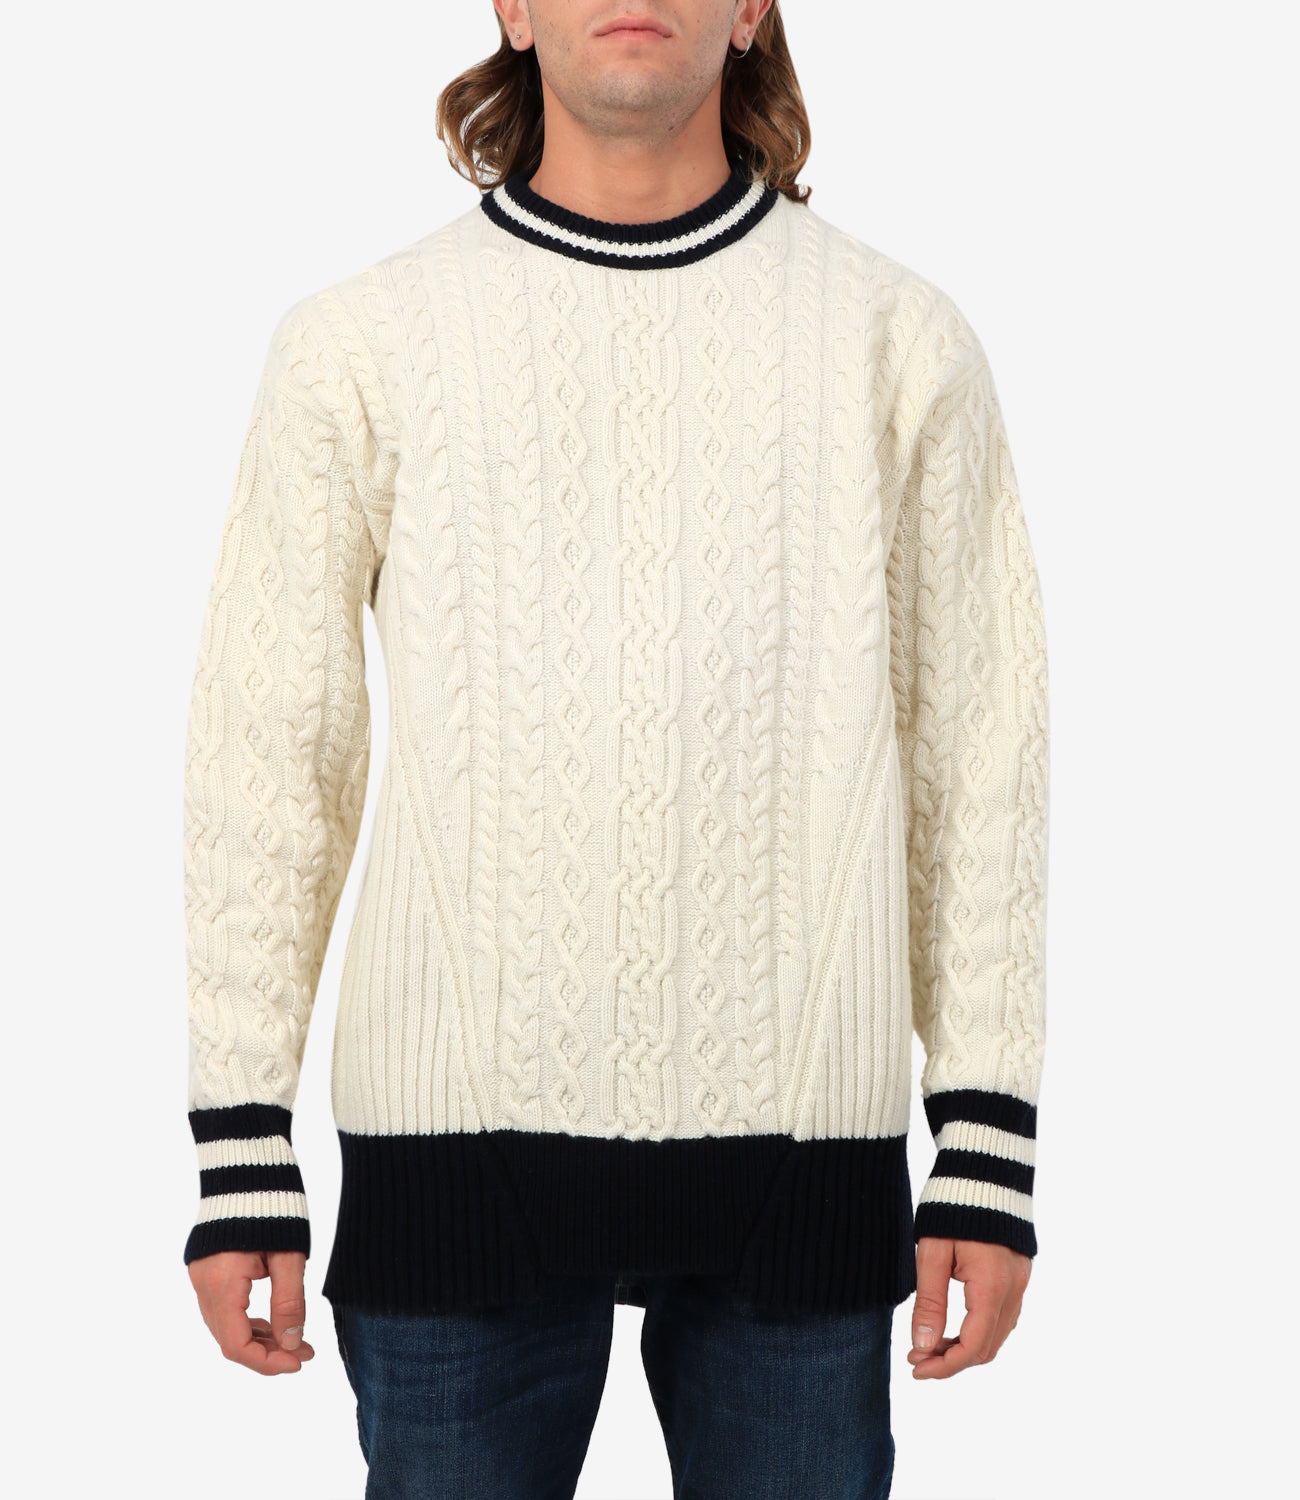 Devon Blue and White Sweater